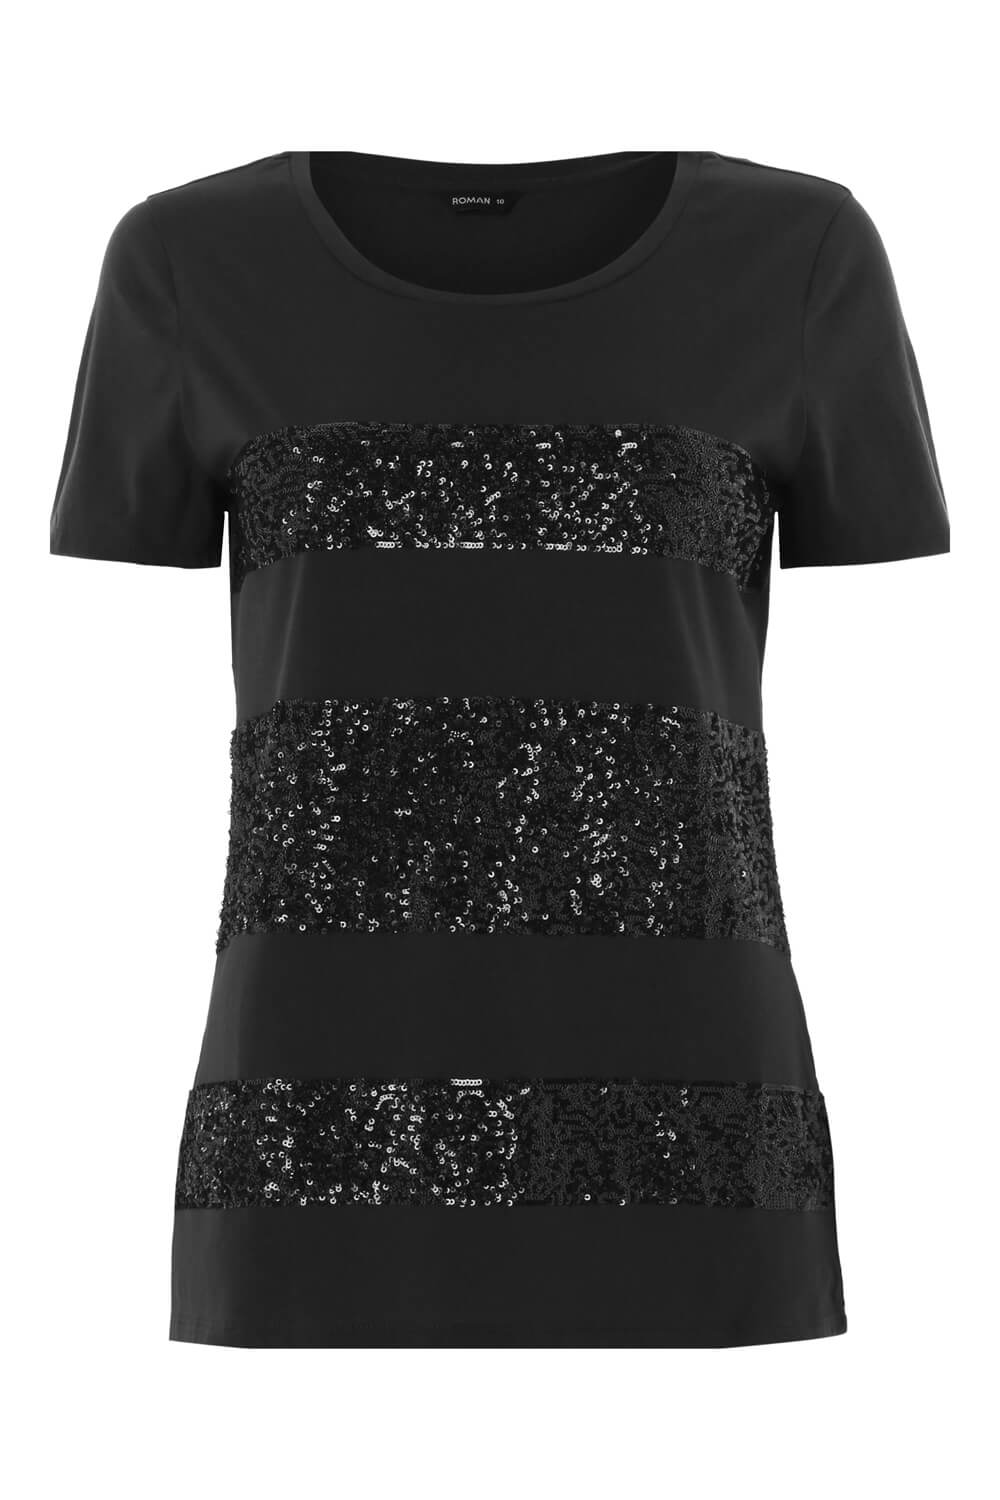 Black Sequin Stripe T-Shirt Top, Image 4 of 8